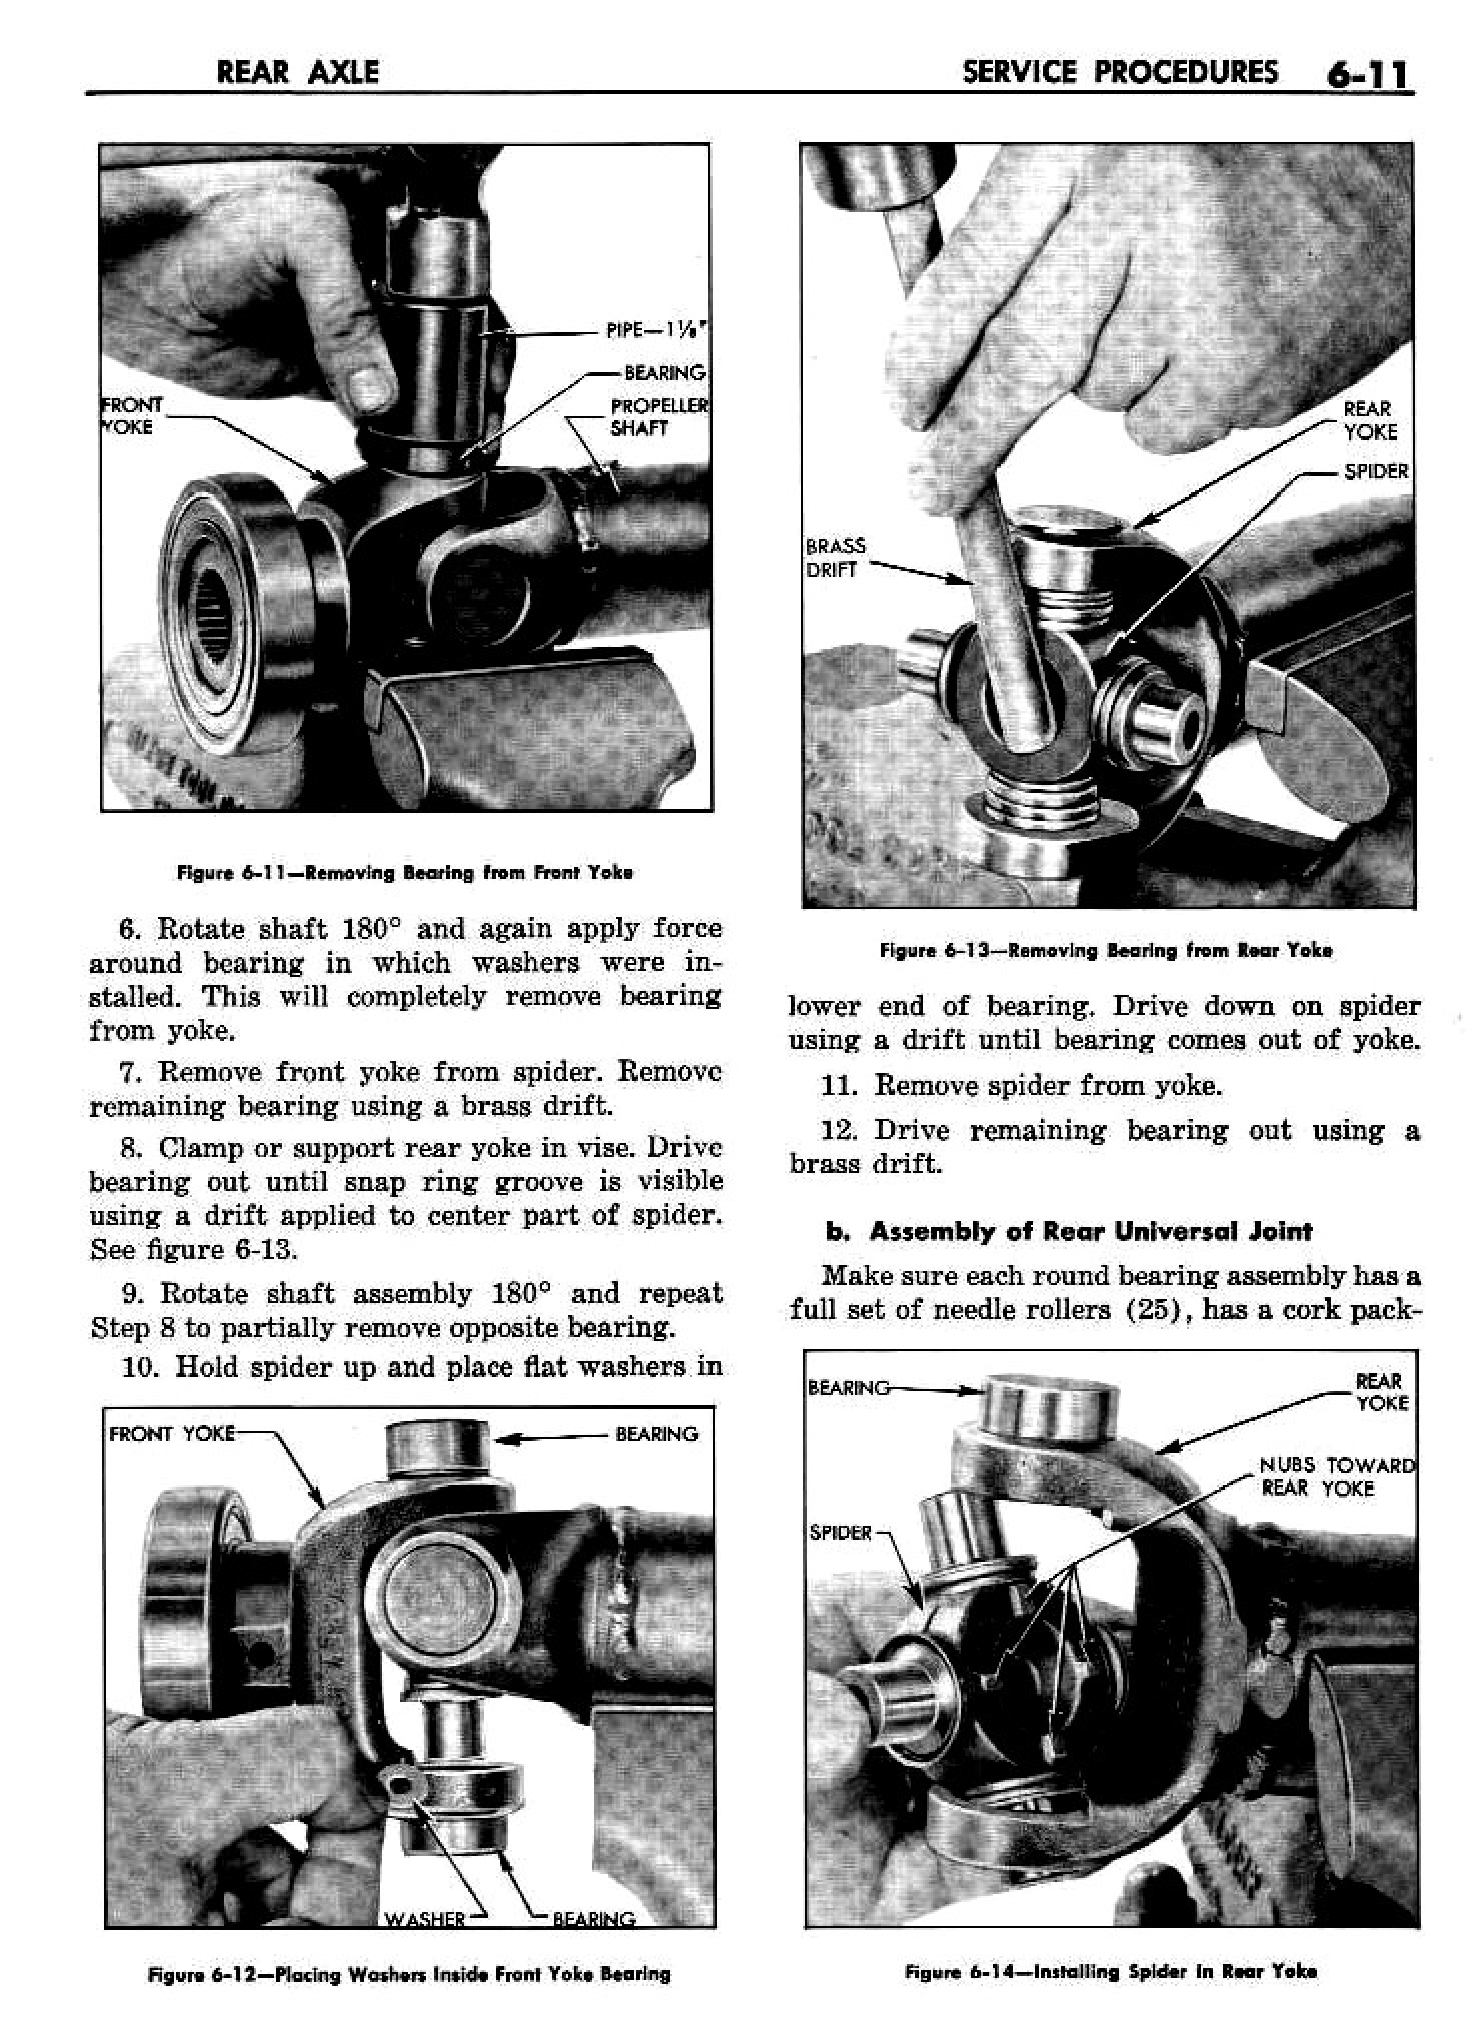 n_07 1958 Buick Shop Manual - Rear Axle_11.jpg